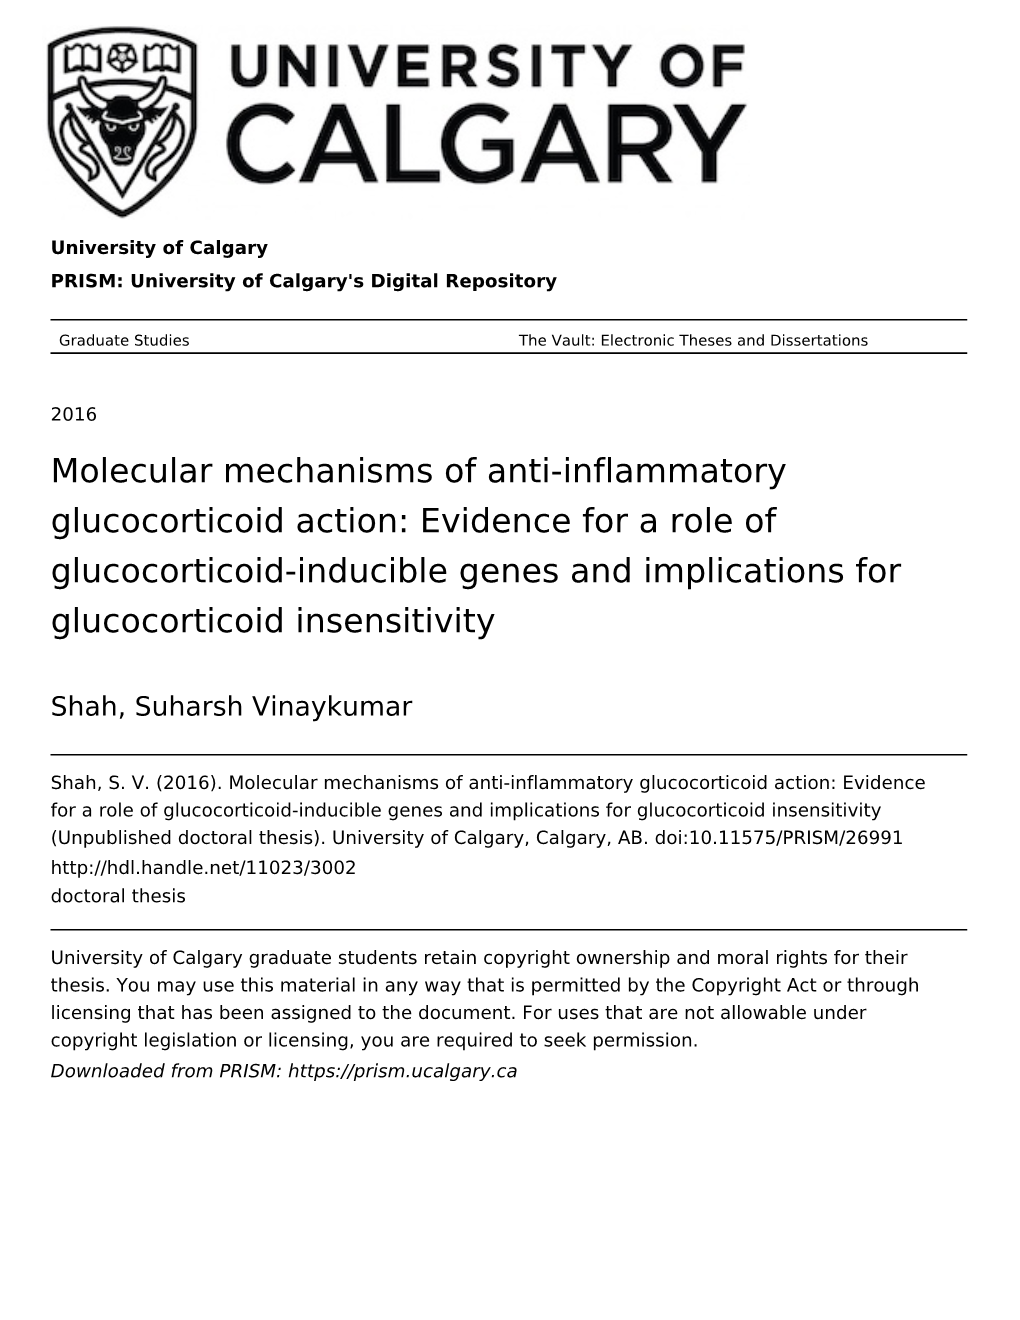 Molecular Mechanisms of Anti-Inflammatory Glucocorticoid